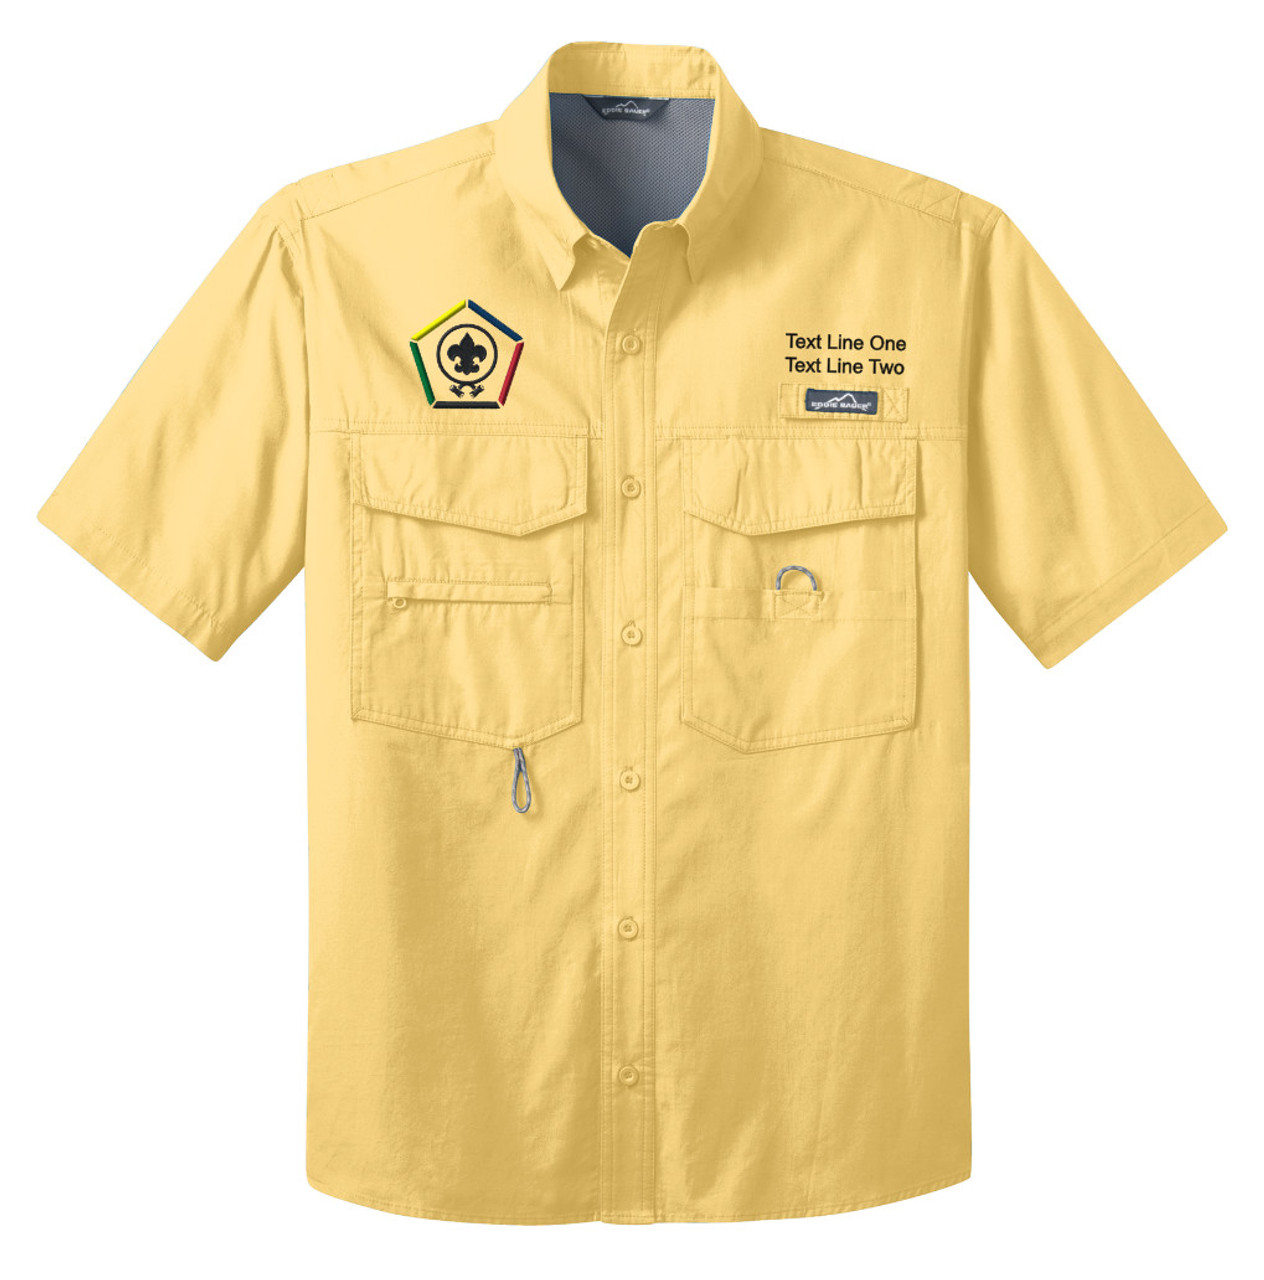 https://cdn11.bigcommerce.com/s-tvu0xuc8/images/stencil/1280x1280/products/2113/10829/eddie-bauer-short-sleeve-goldenrod-yellow-fishing-shirt-with-new-wood-badge-logo__04128.1633651960.jpg?c=2